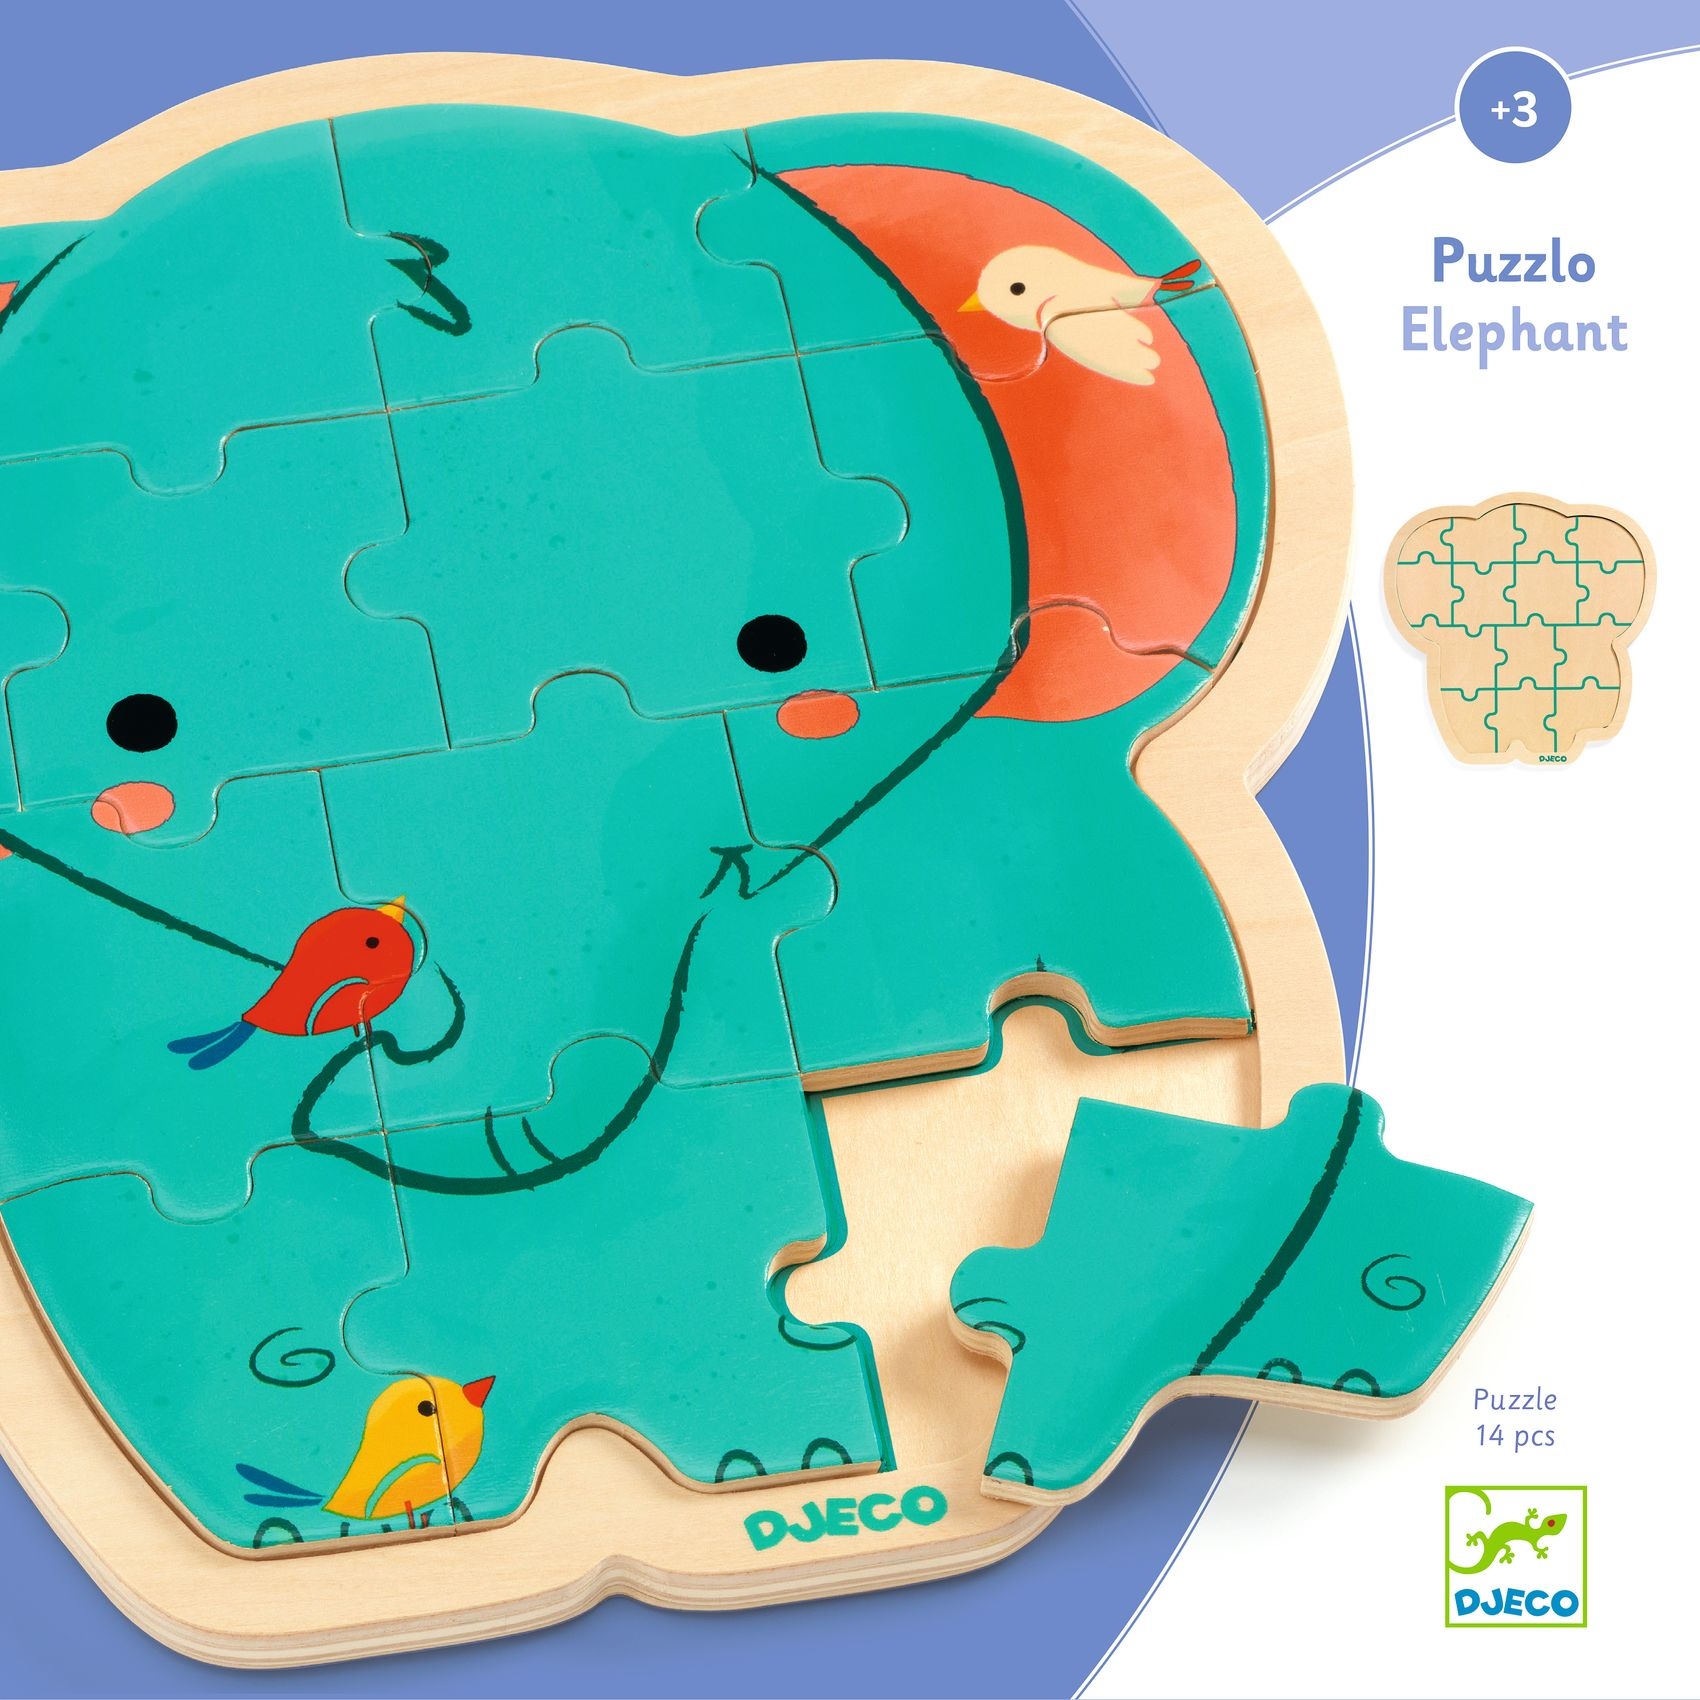 Fa puzzle - Elefánt, 14 db-os - Puzzlo Elephant - 1